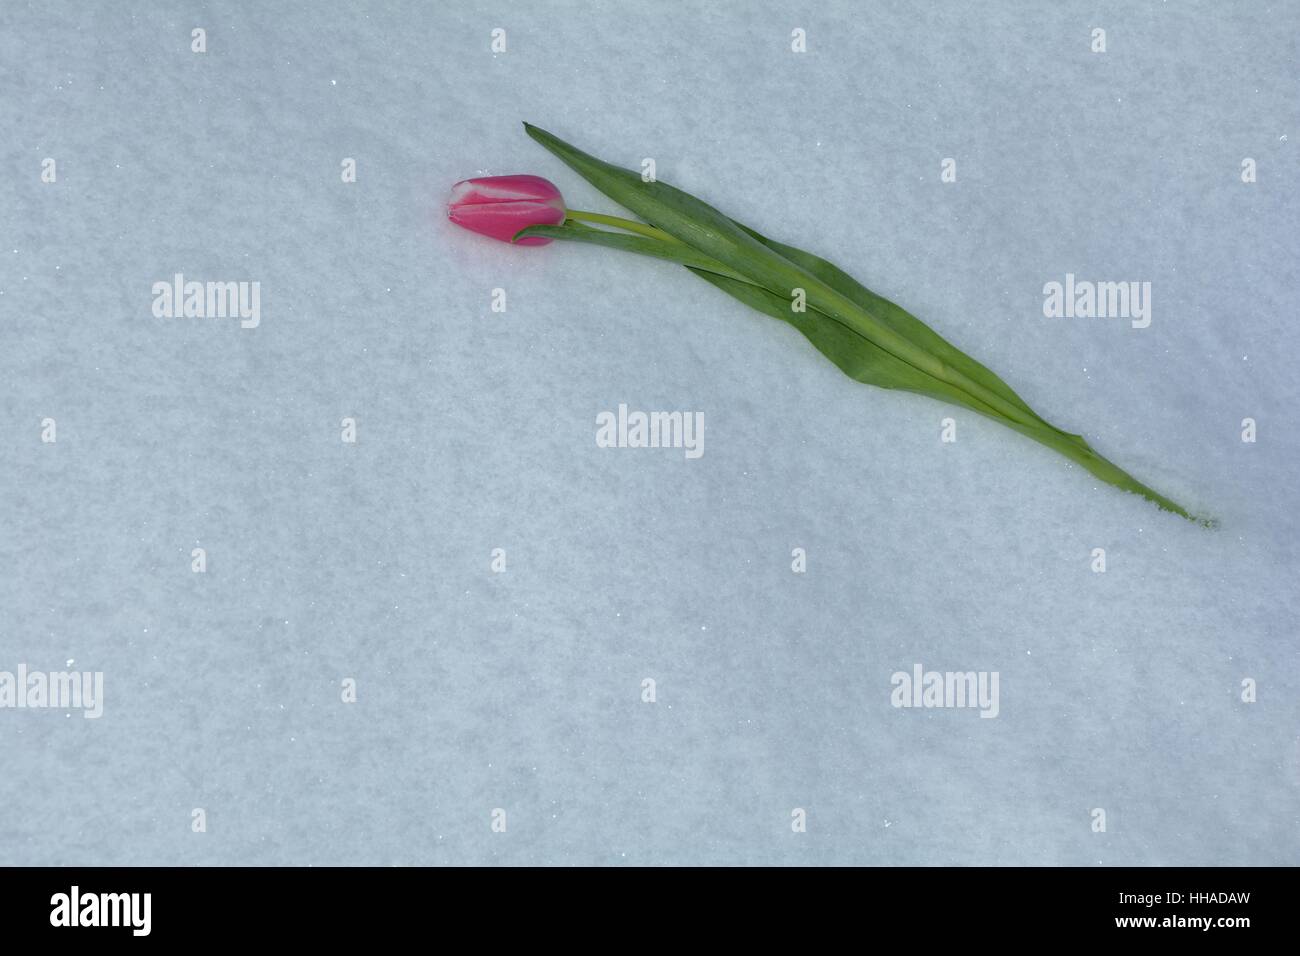 Rosa Tulpe liegt im Schnee (Tulipa) Stockfoto